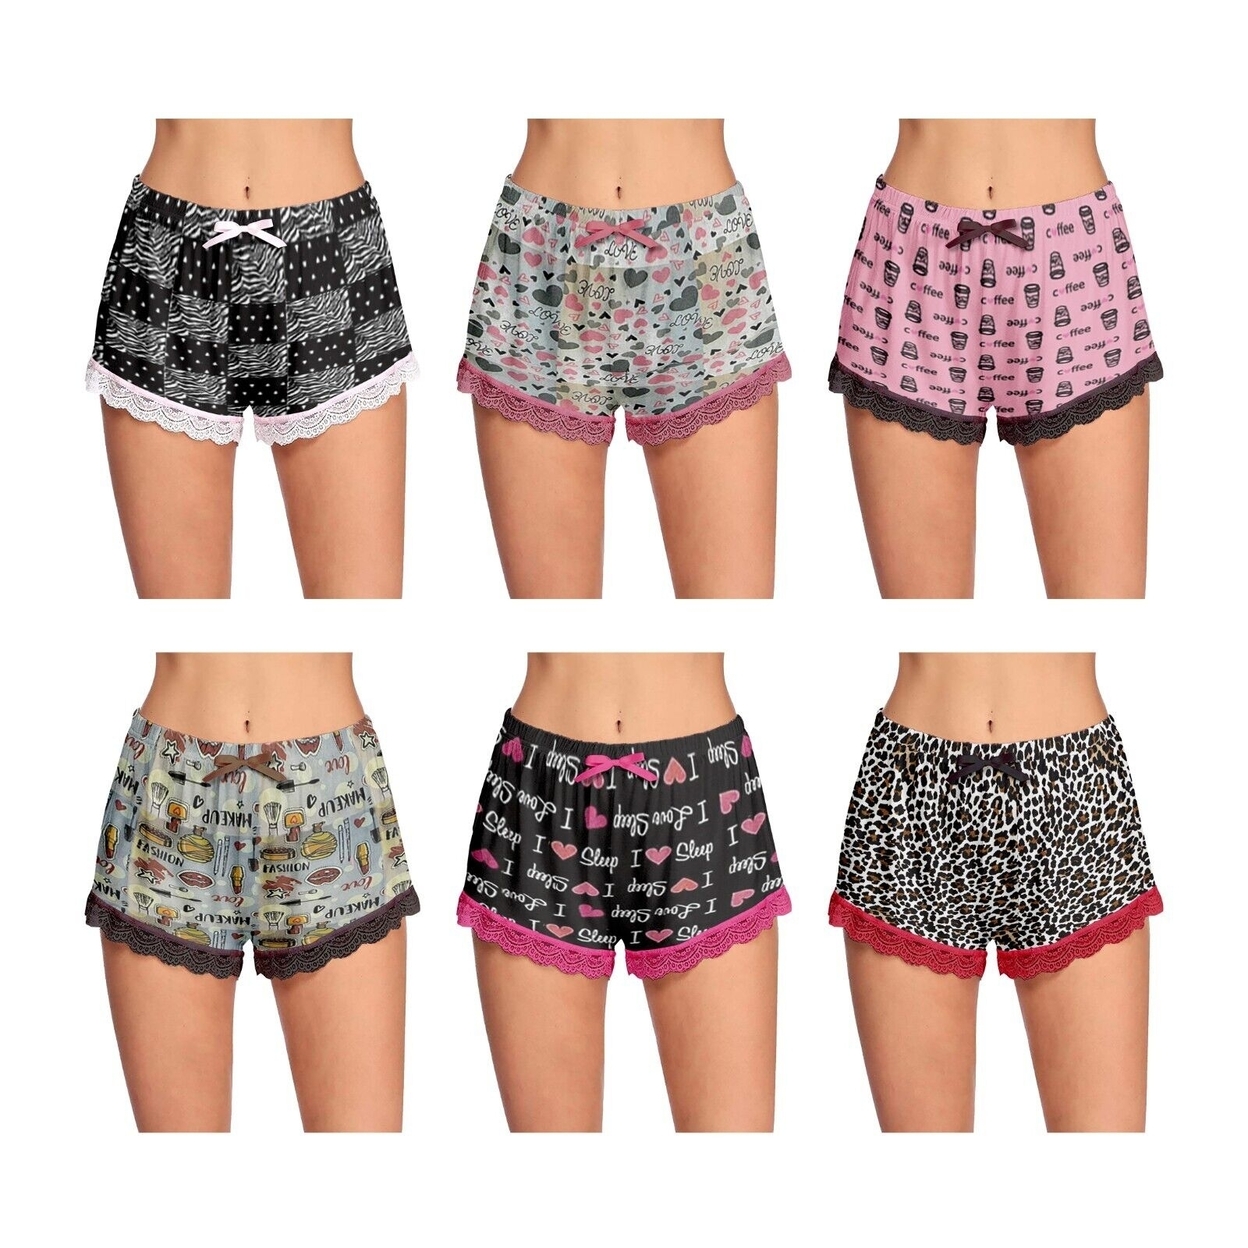 5-Pack: Women's Ultra-Soft Cozy Fun Printed Lace Trim Pajama Lounge Shorts - Large, Animal